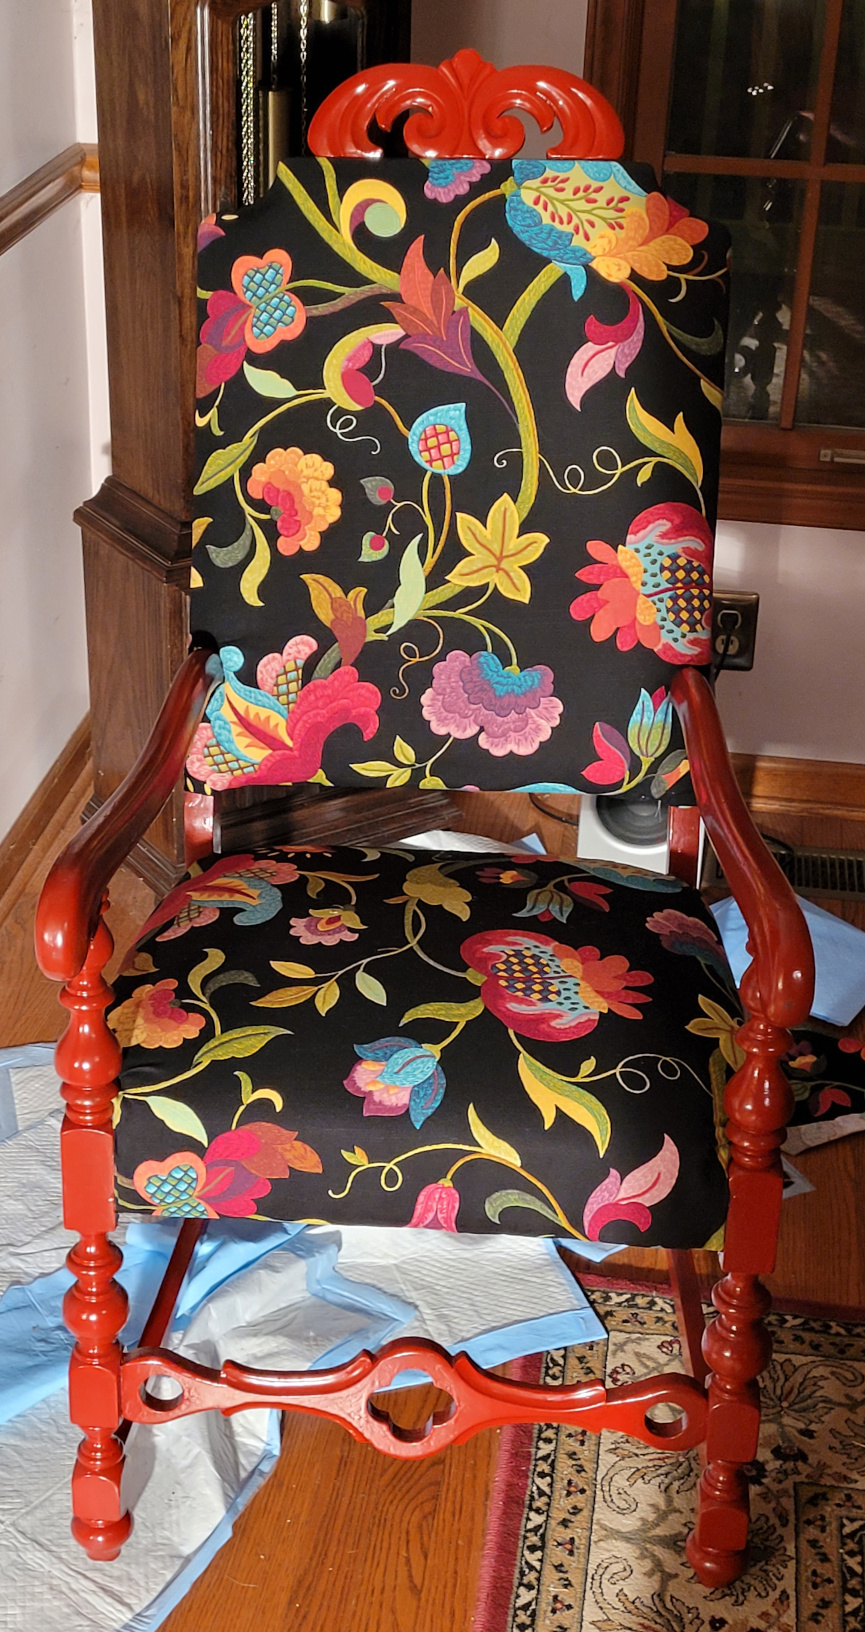 Chair restored